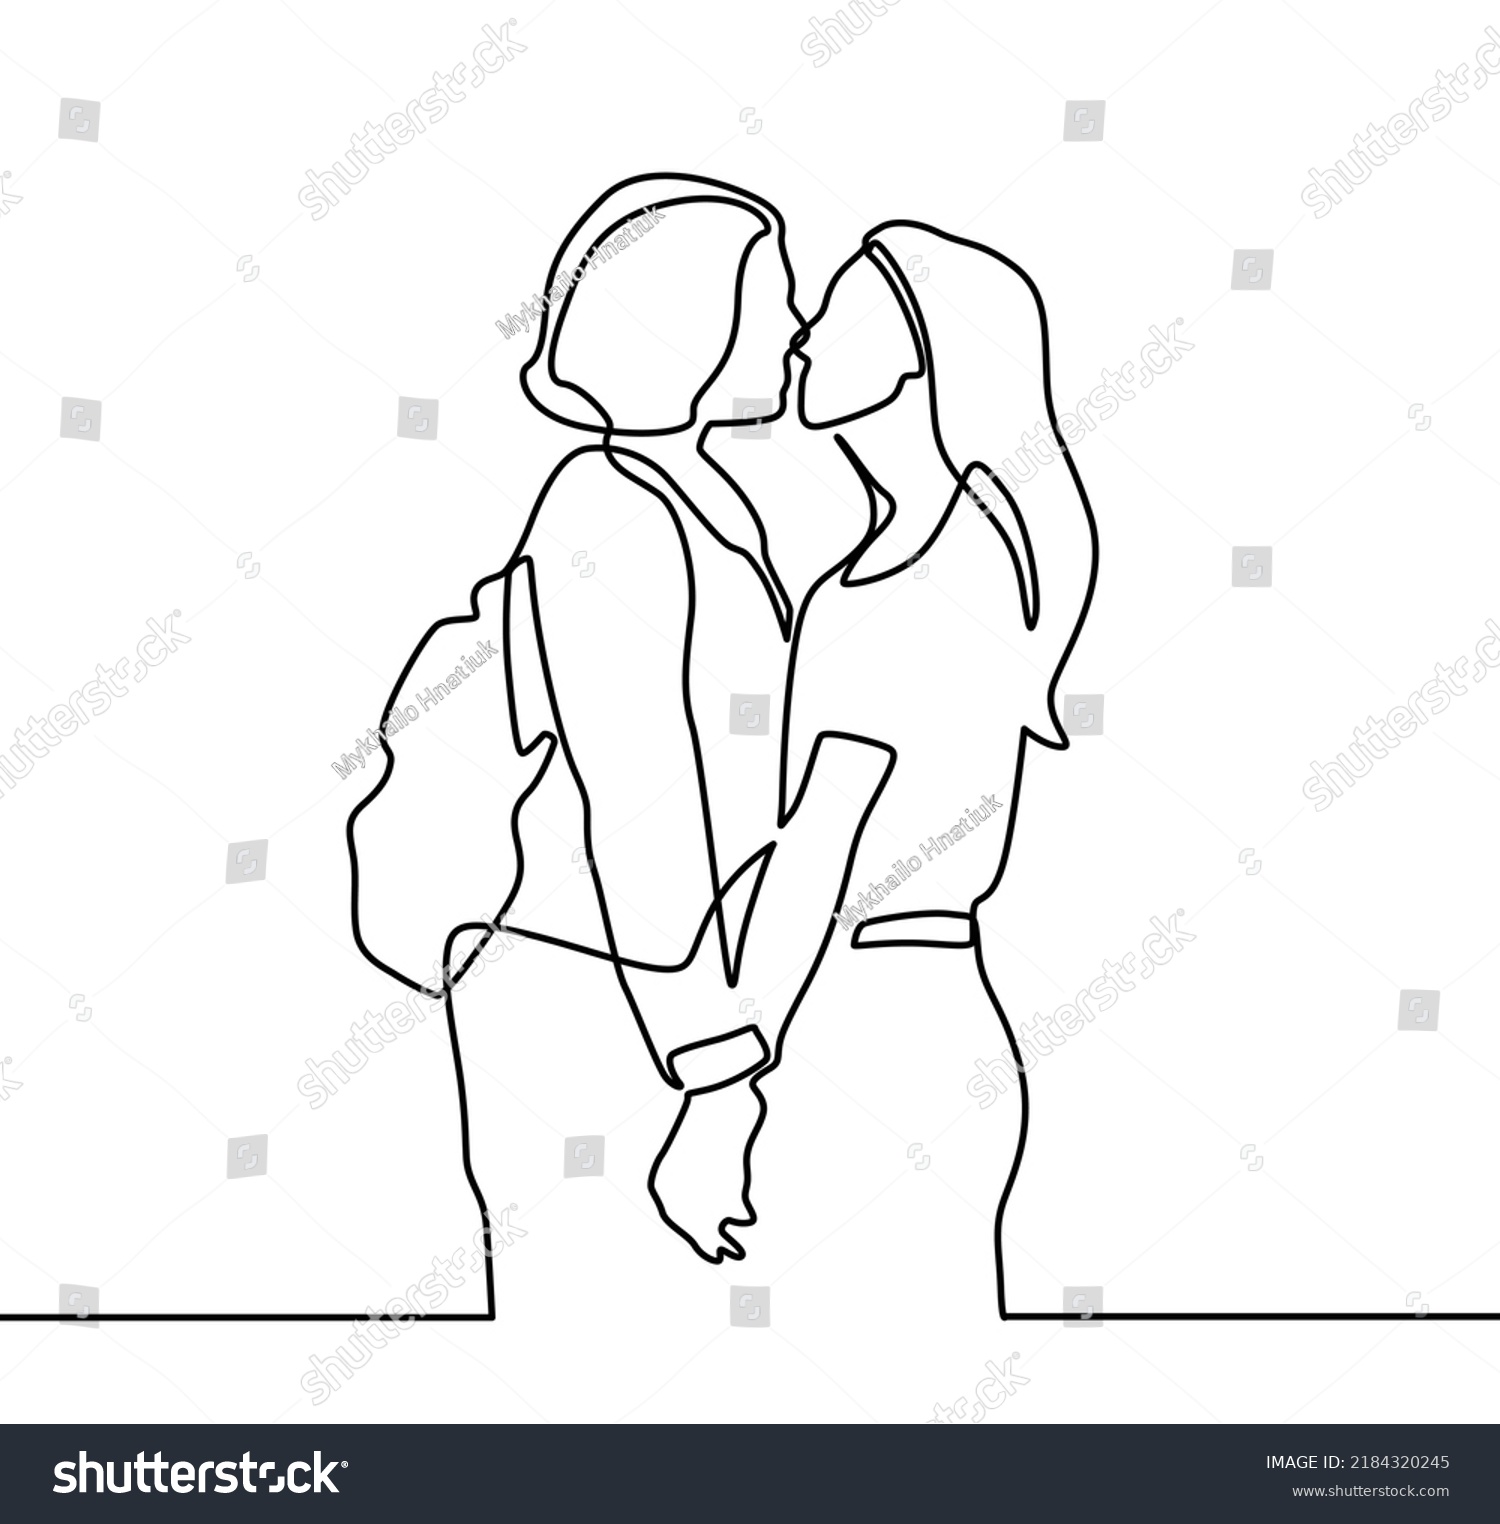 Continuous Drawing Two Lesbians Kissing Each เวกเตอร์สต็อก ปลอดค่าลิขสิทธิ์ 2184320245 